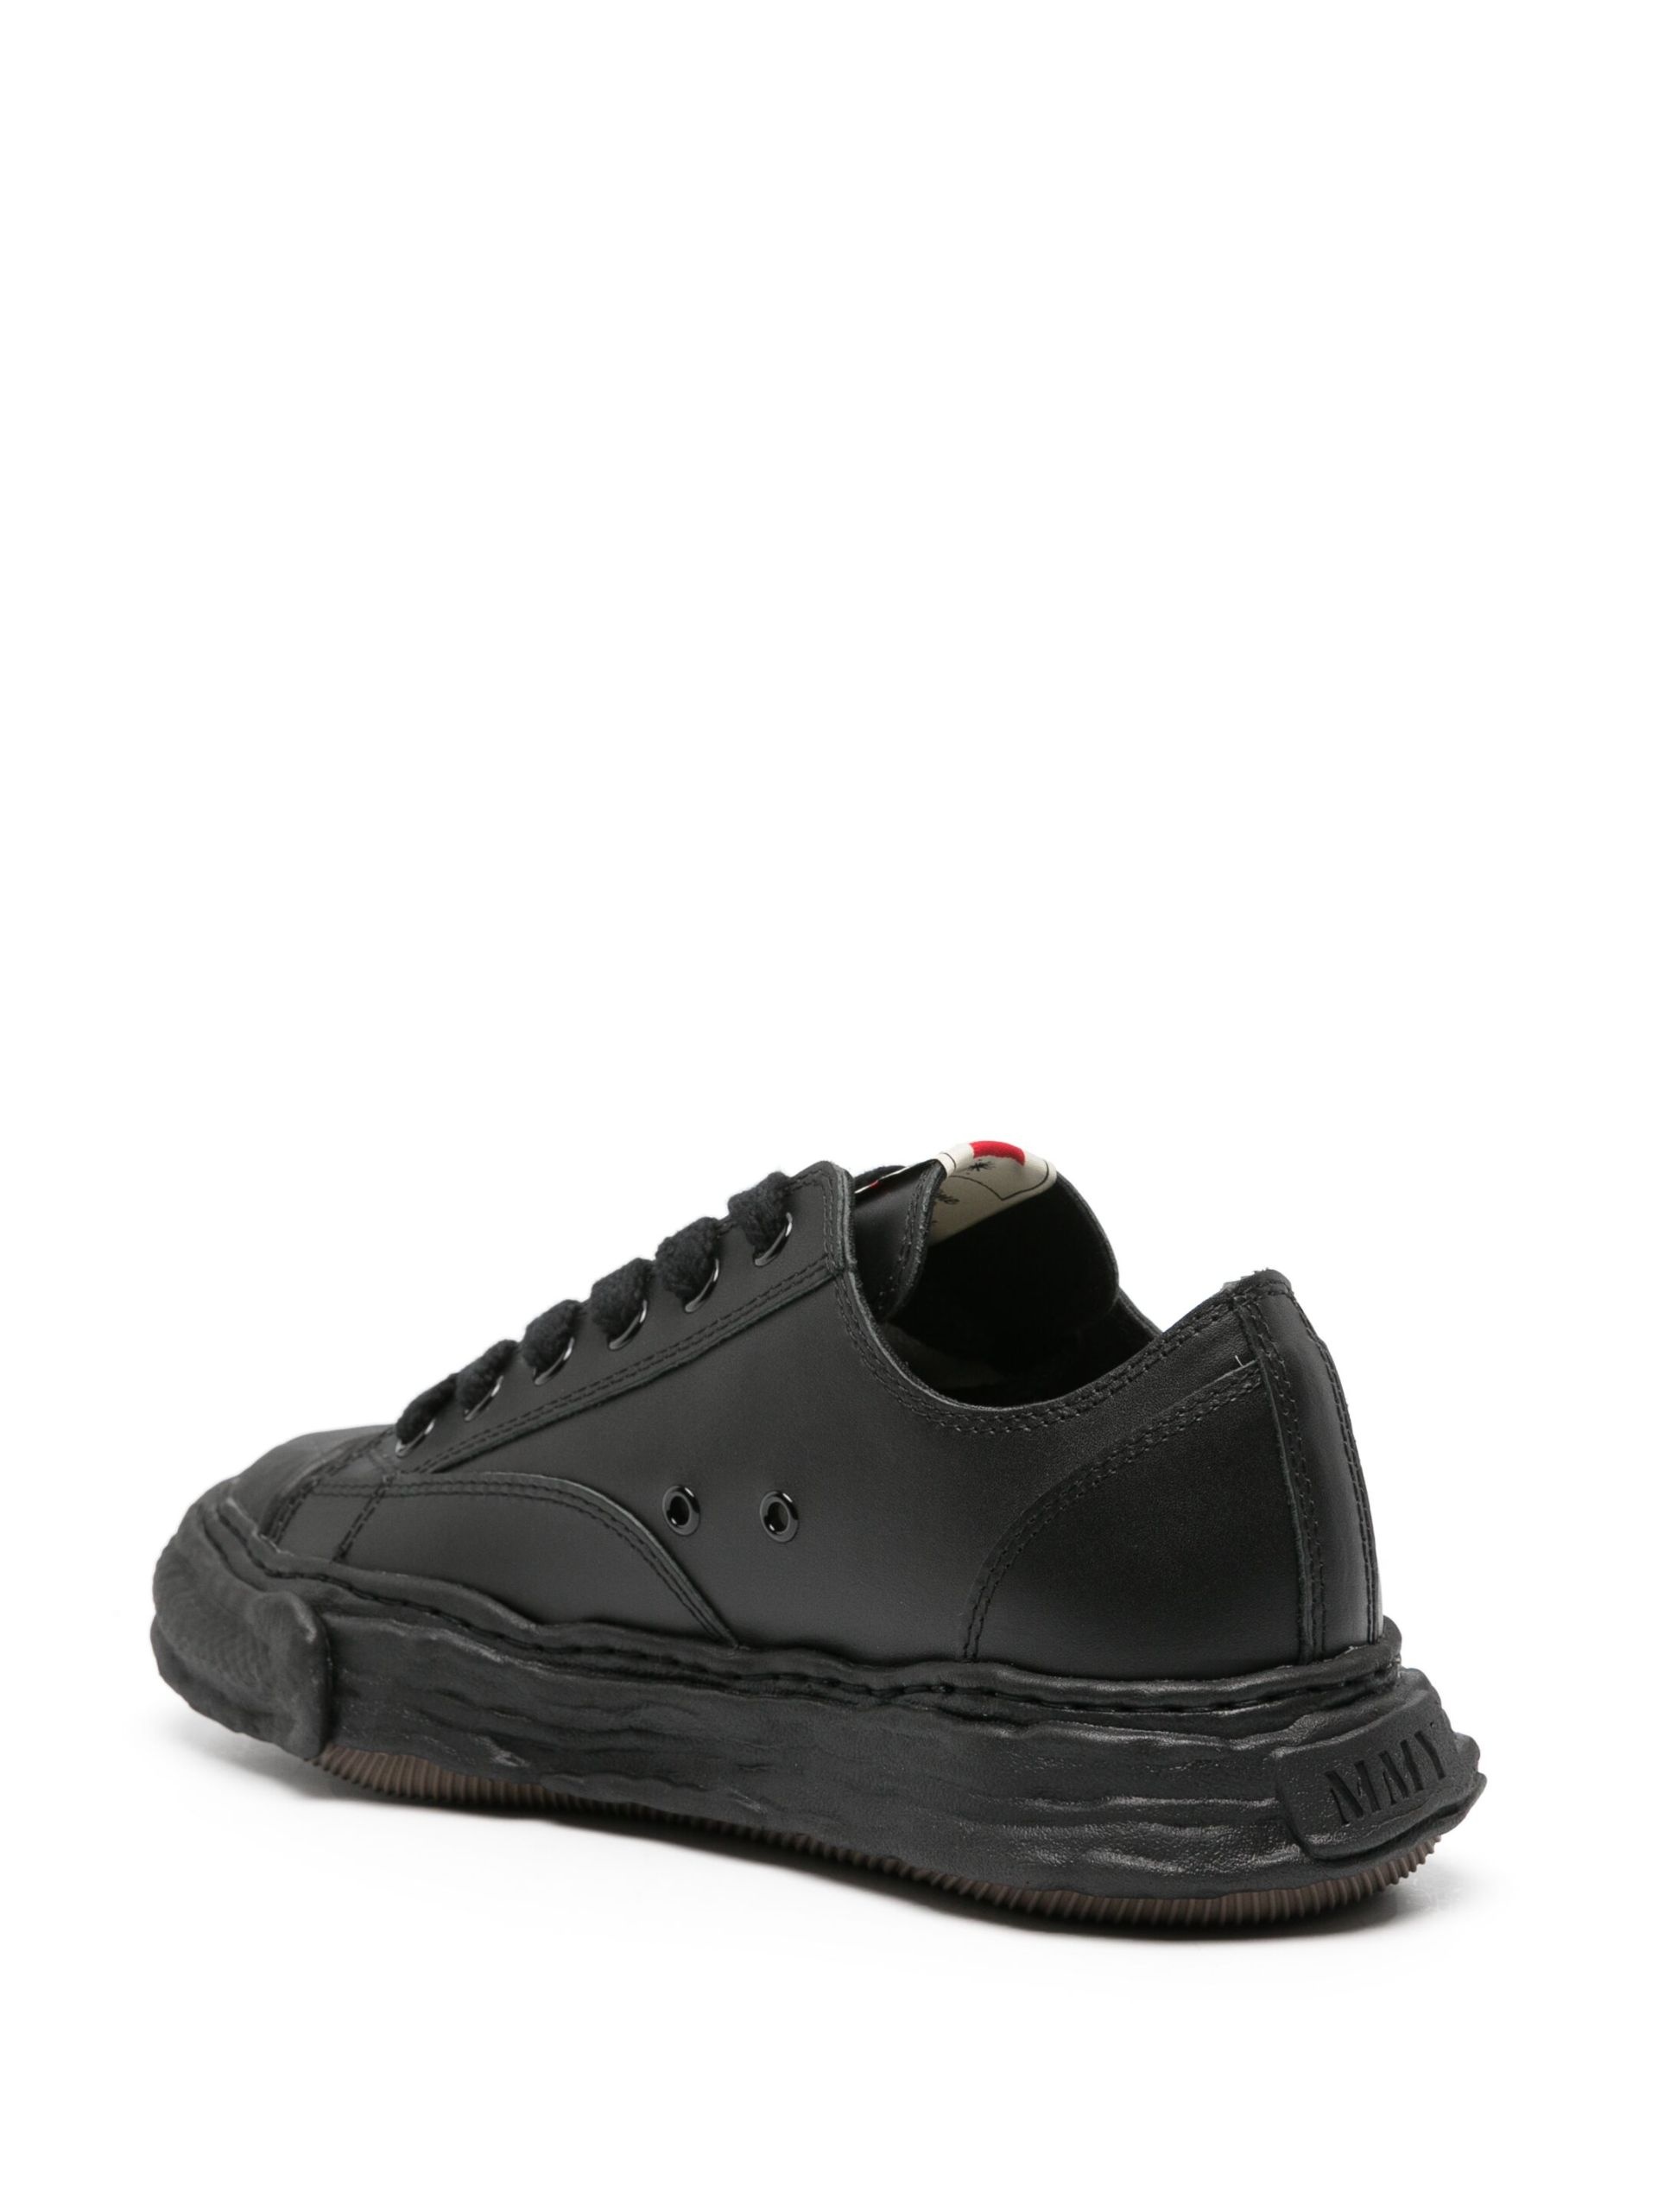 Black Peterson 23 Original Sole Leather Sneakers - 3